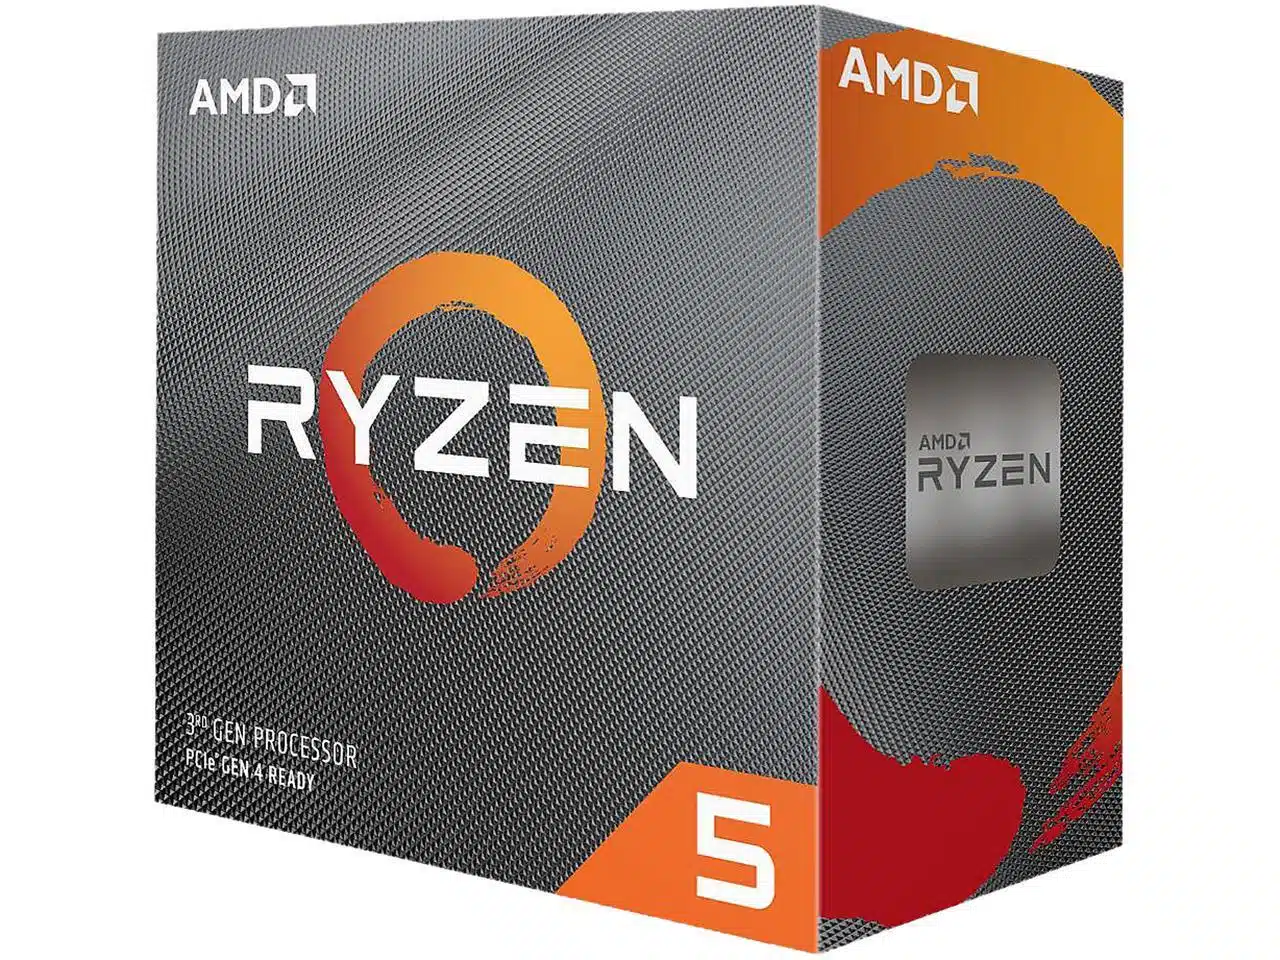 AMD Ryzen 5 3600 6 Core 12 Thread 3.6-4.2 Ghz 35 MB 65W AM4 Desktop Processor - AMD Processors